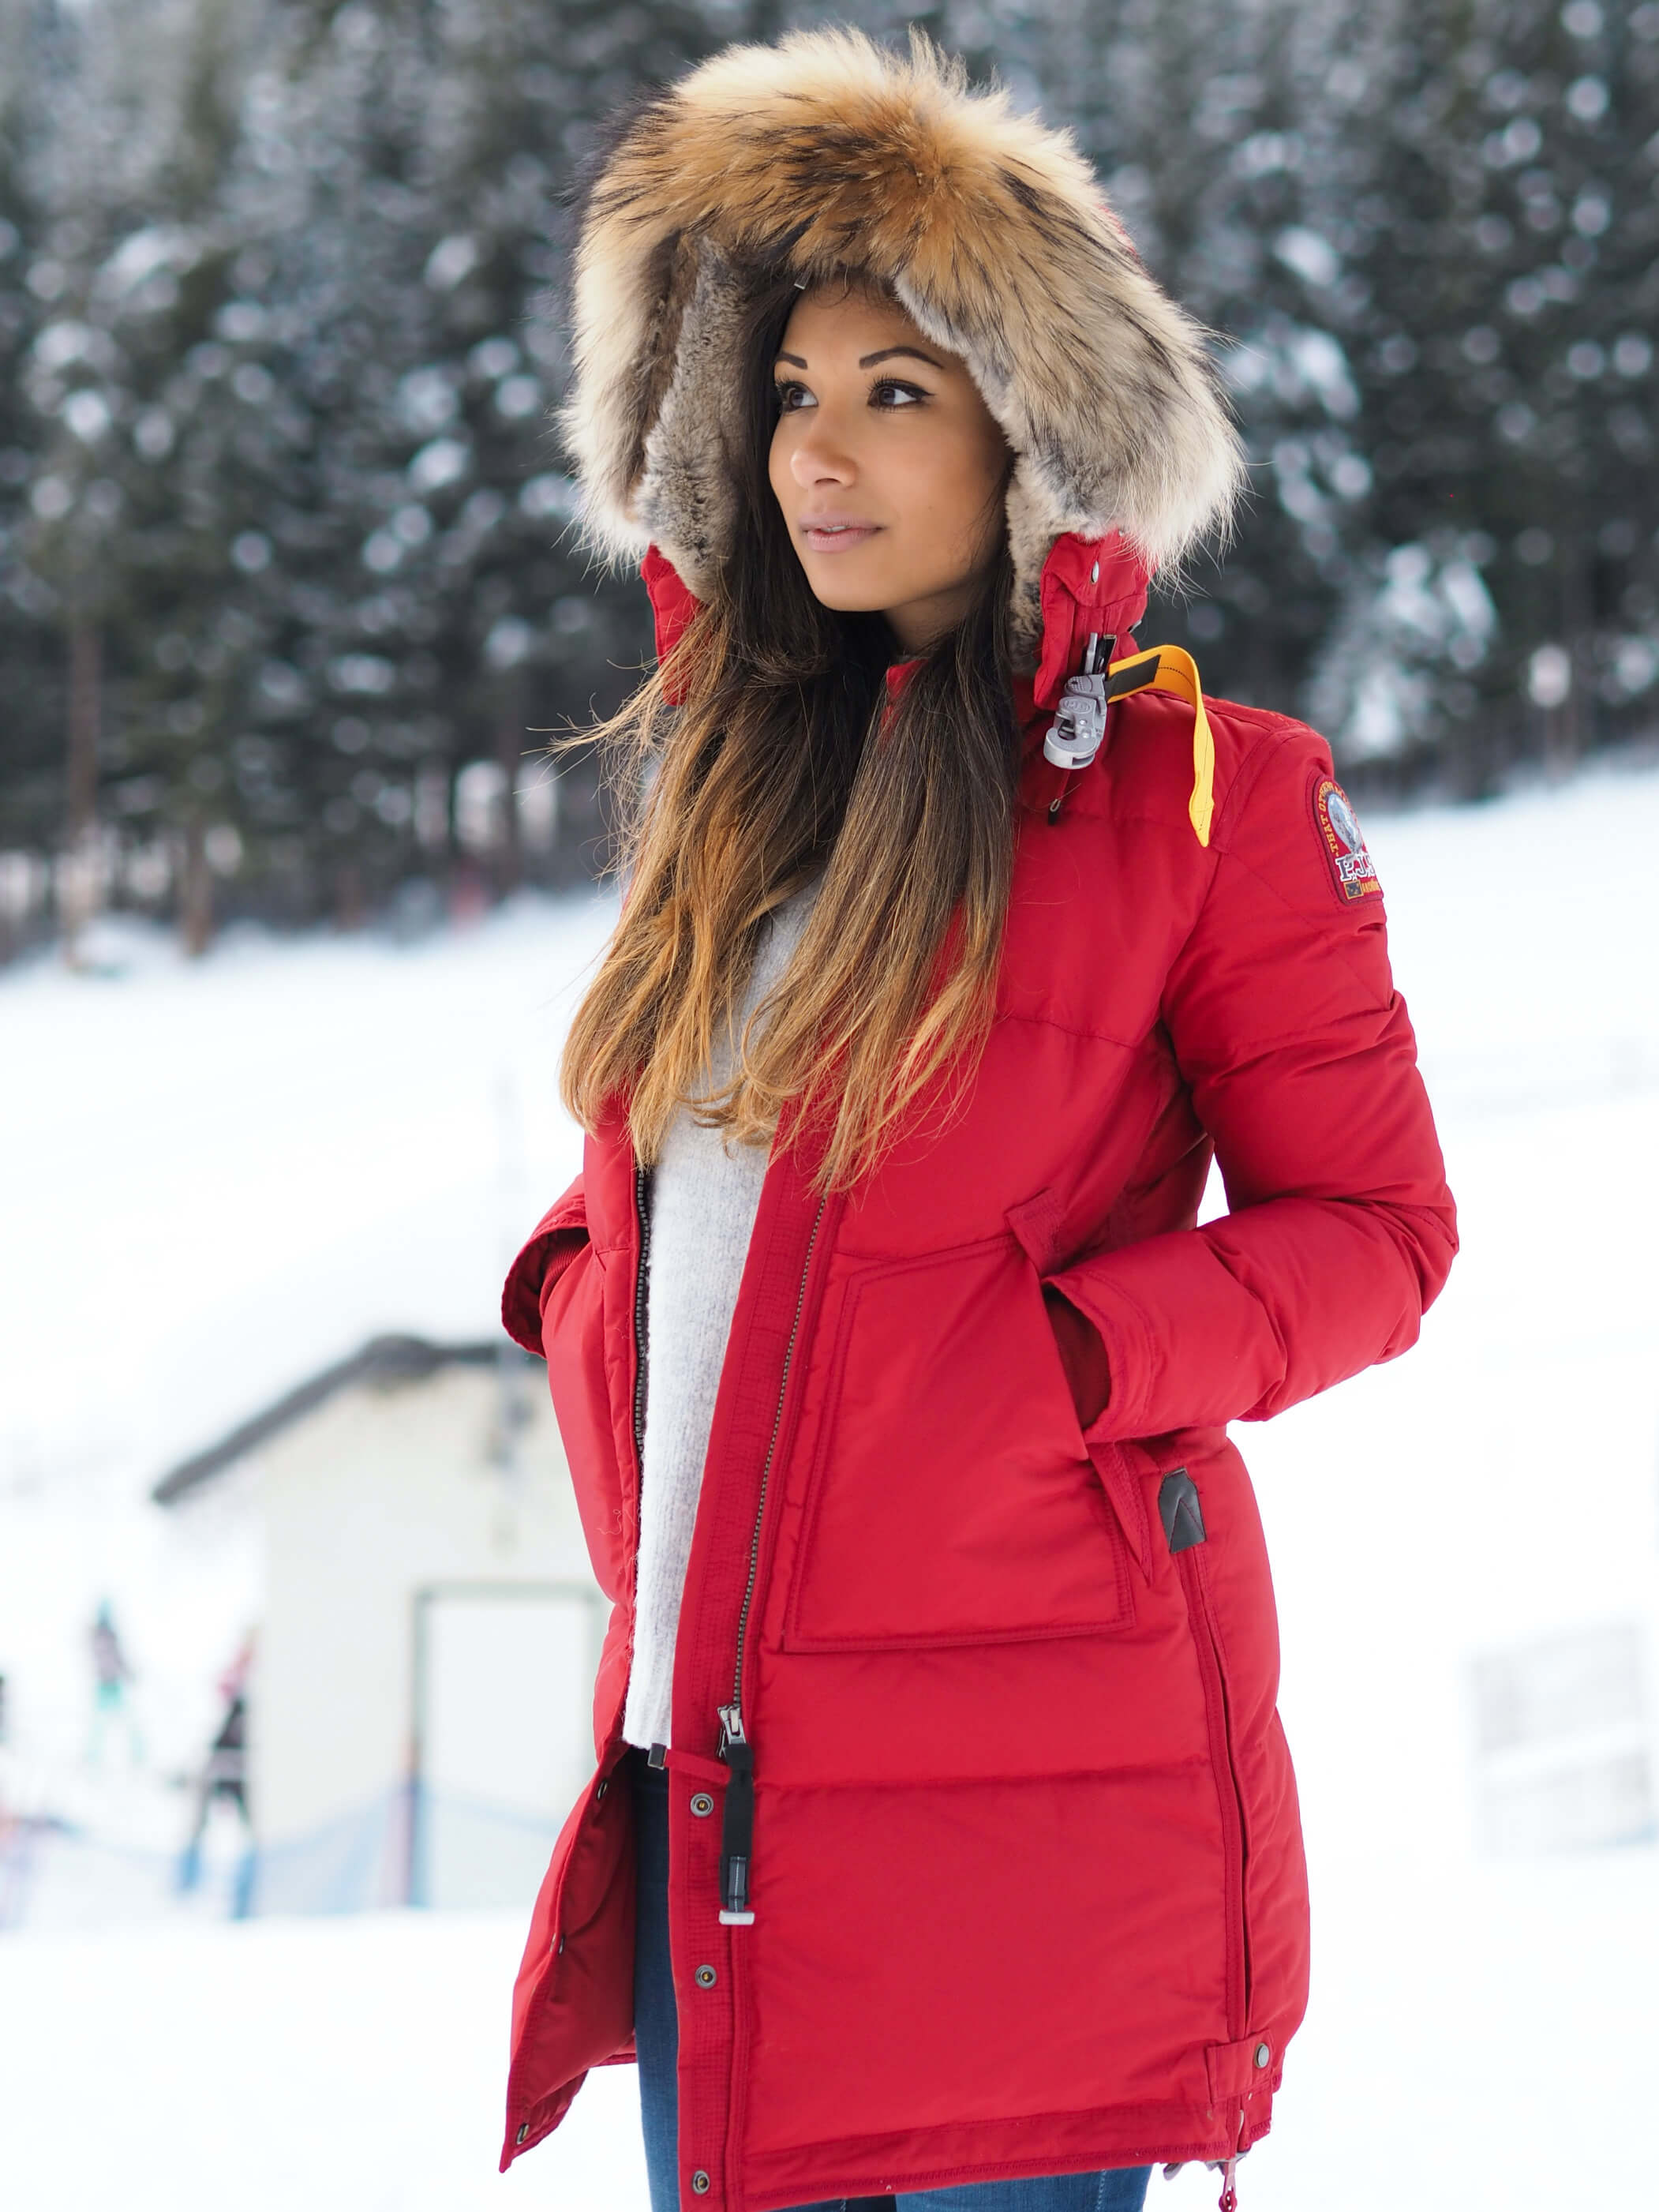 Finding The Perfect Winter Coat | Go Live Explore